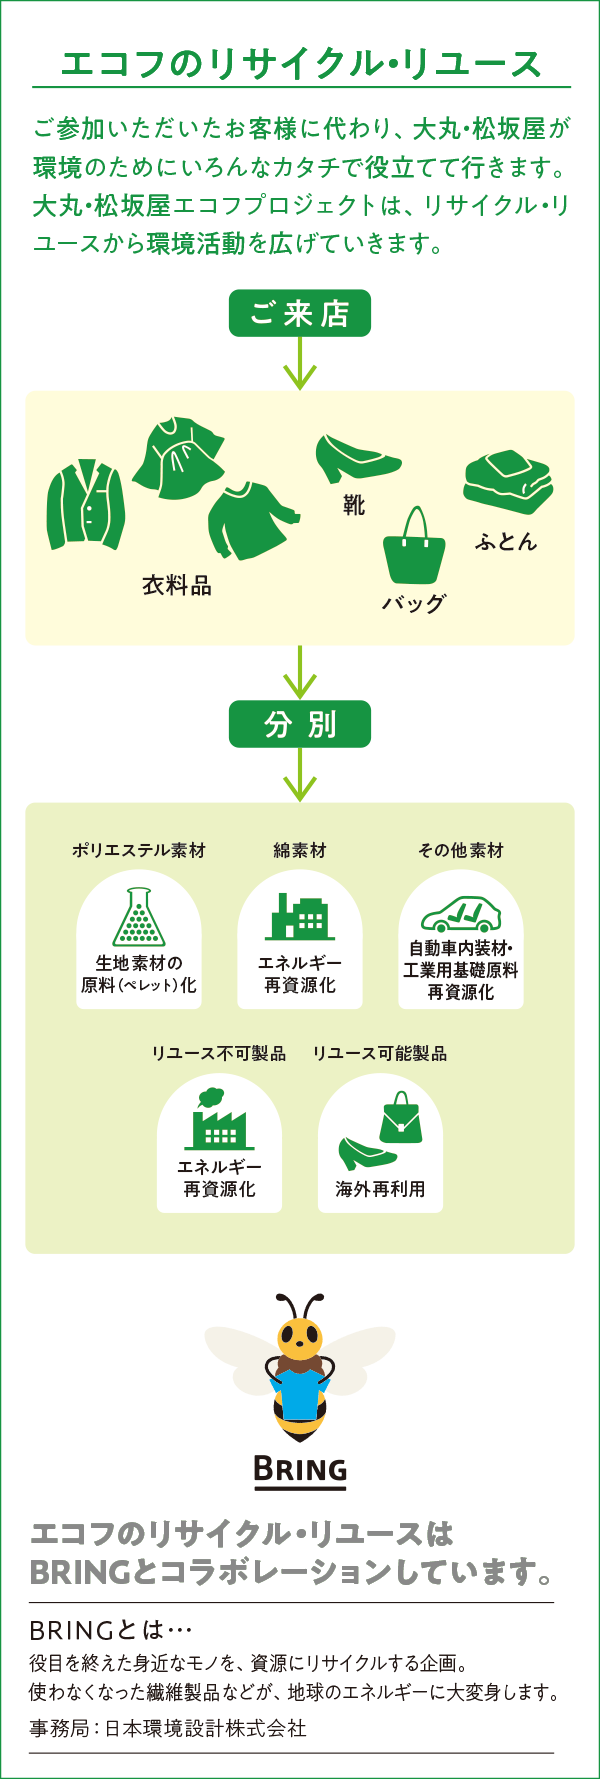 ECOFF(エコフ)リサイクルキャンペーン｜松坂屋名古屋店